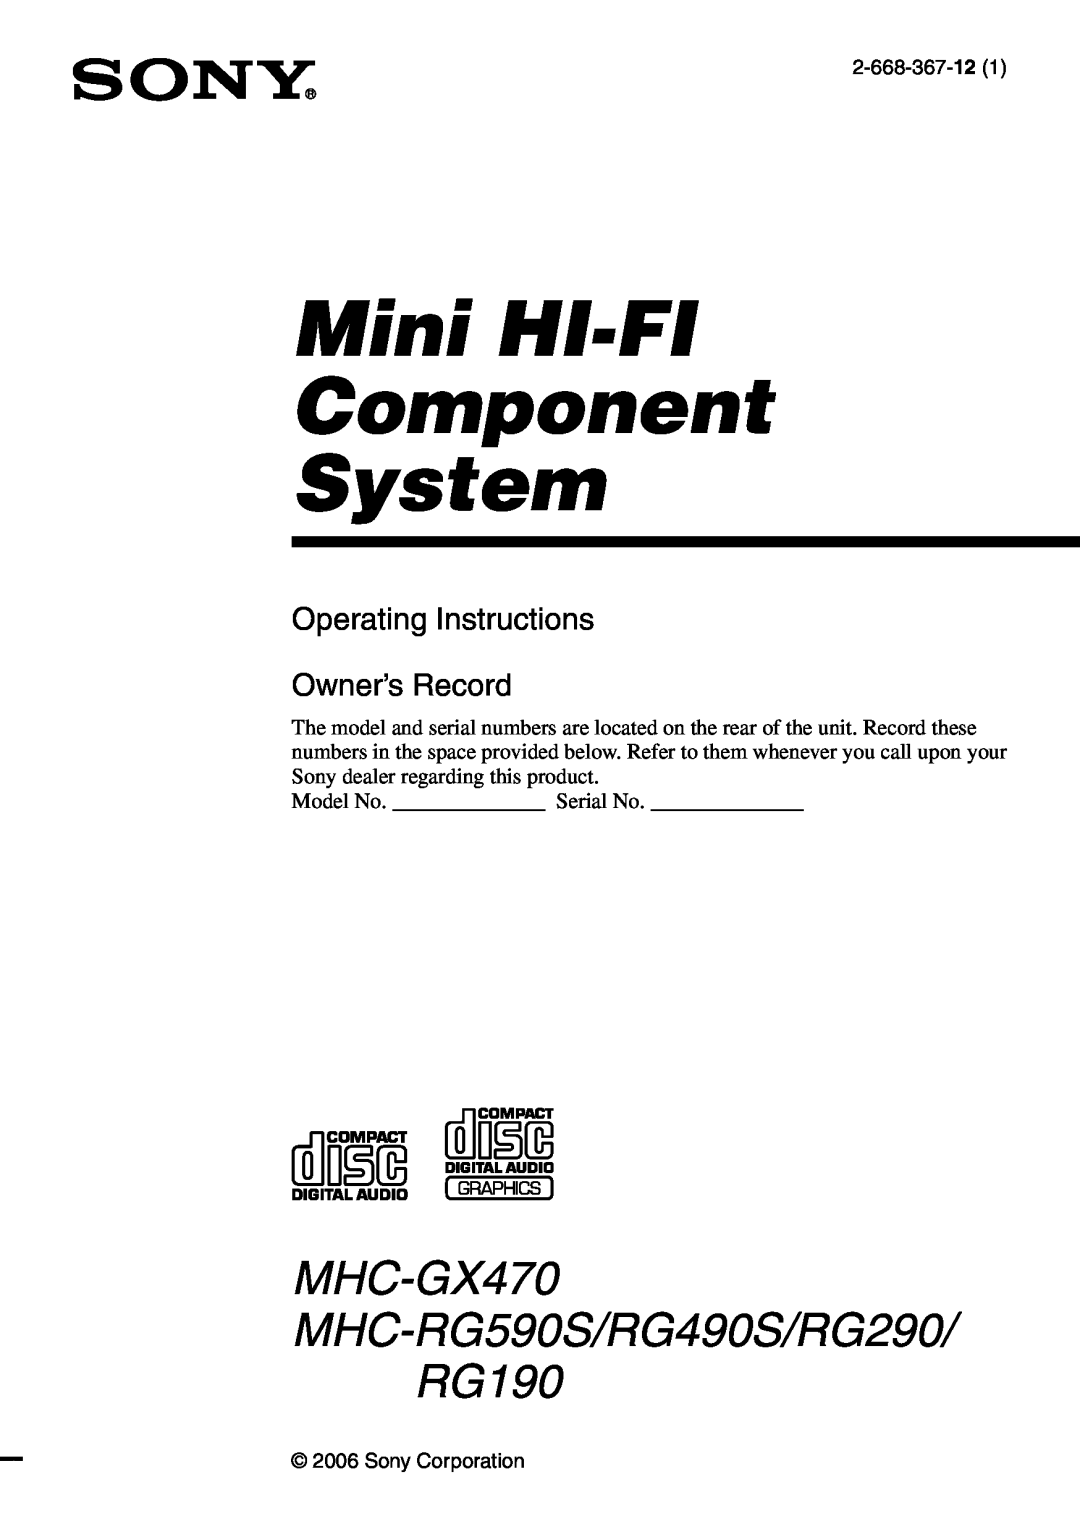 Sony MHC-RG59)S/RG490S/RG290/RG190 manual Mini HI-FI Component System, MHC-GX470 MHC-RG590S/RG490S/RG290 RG190 